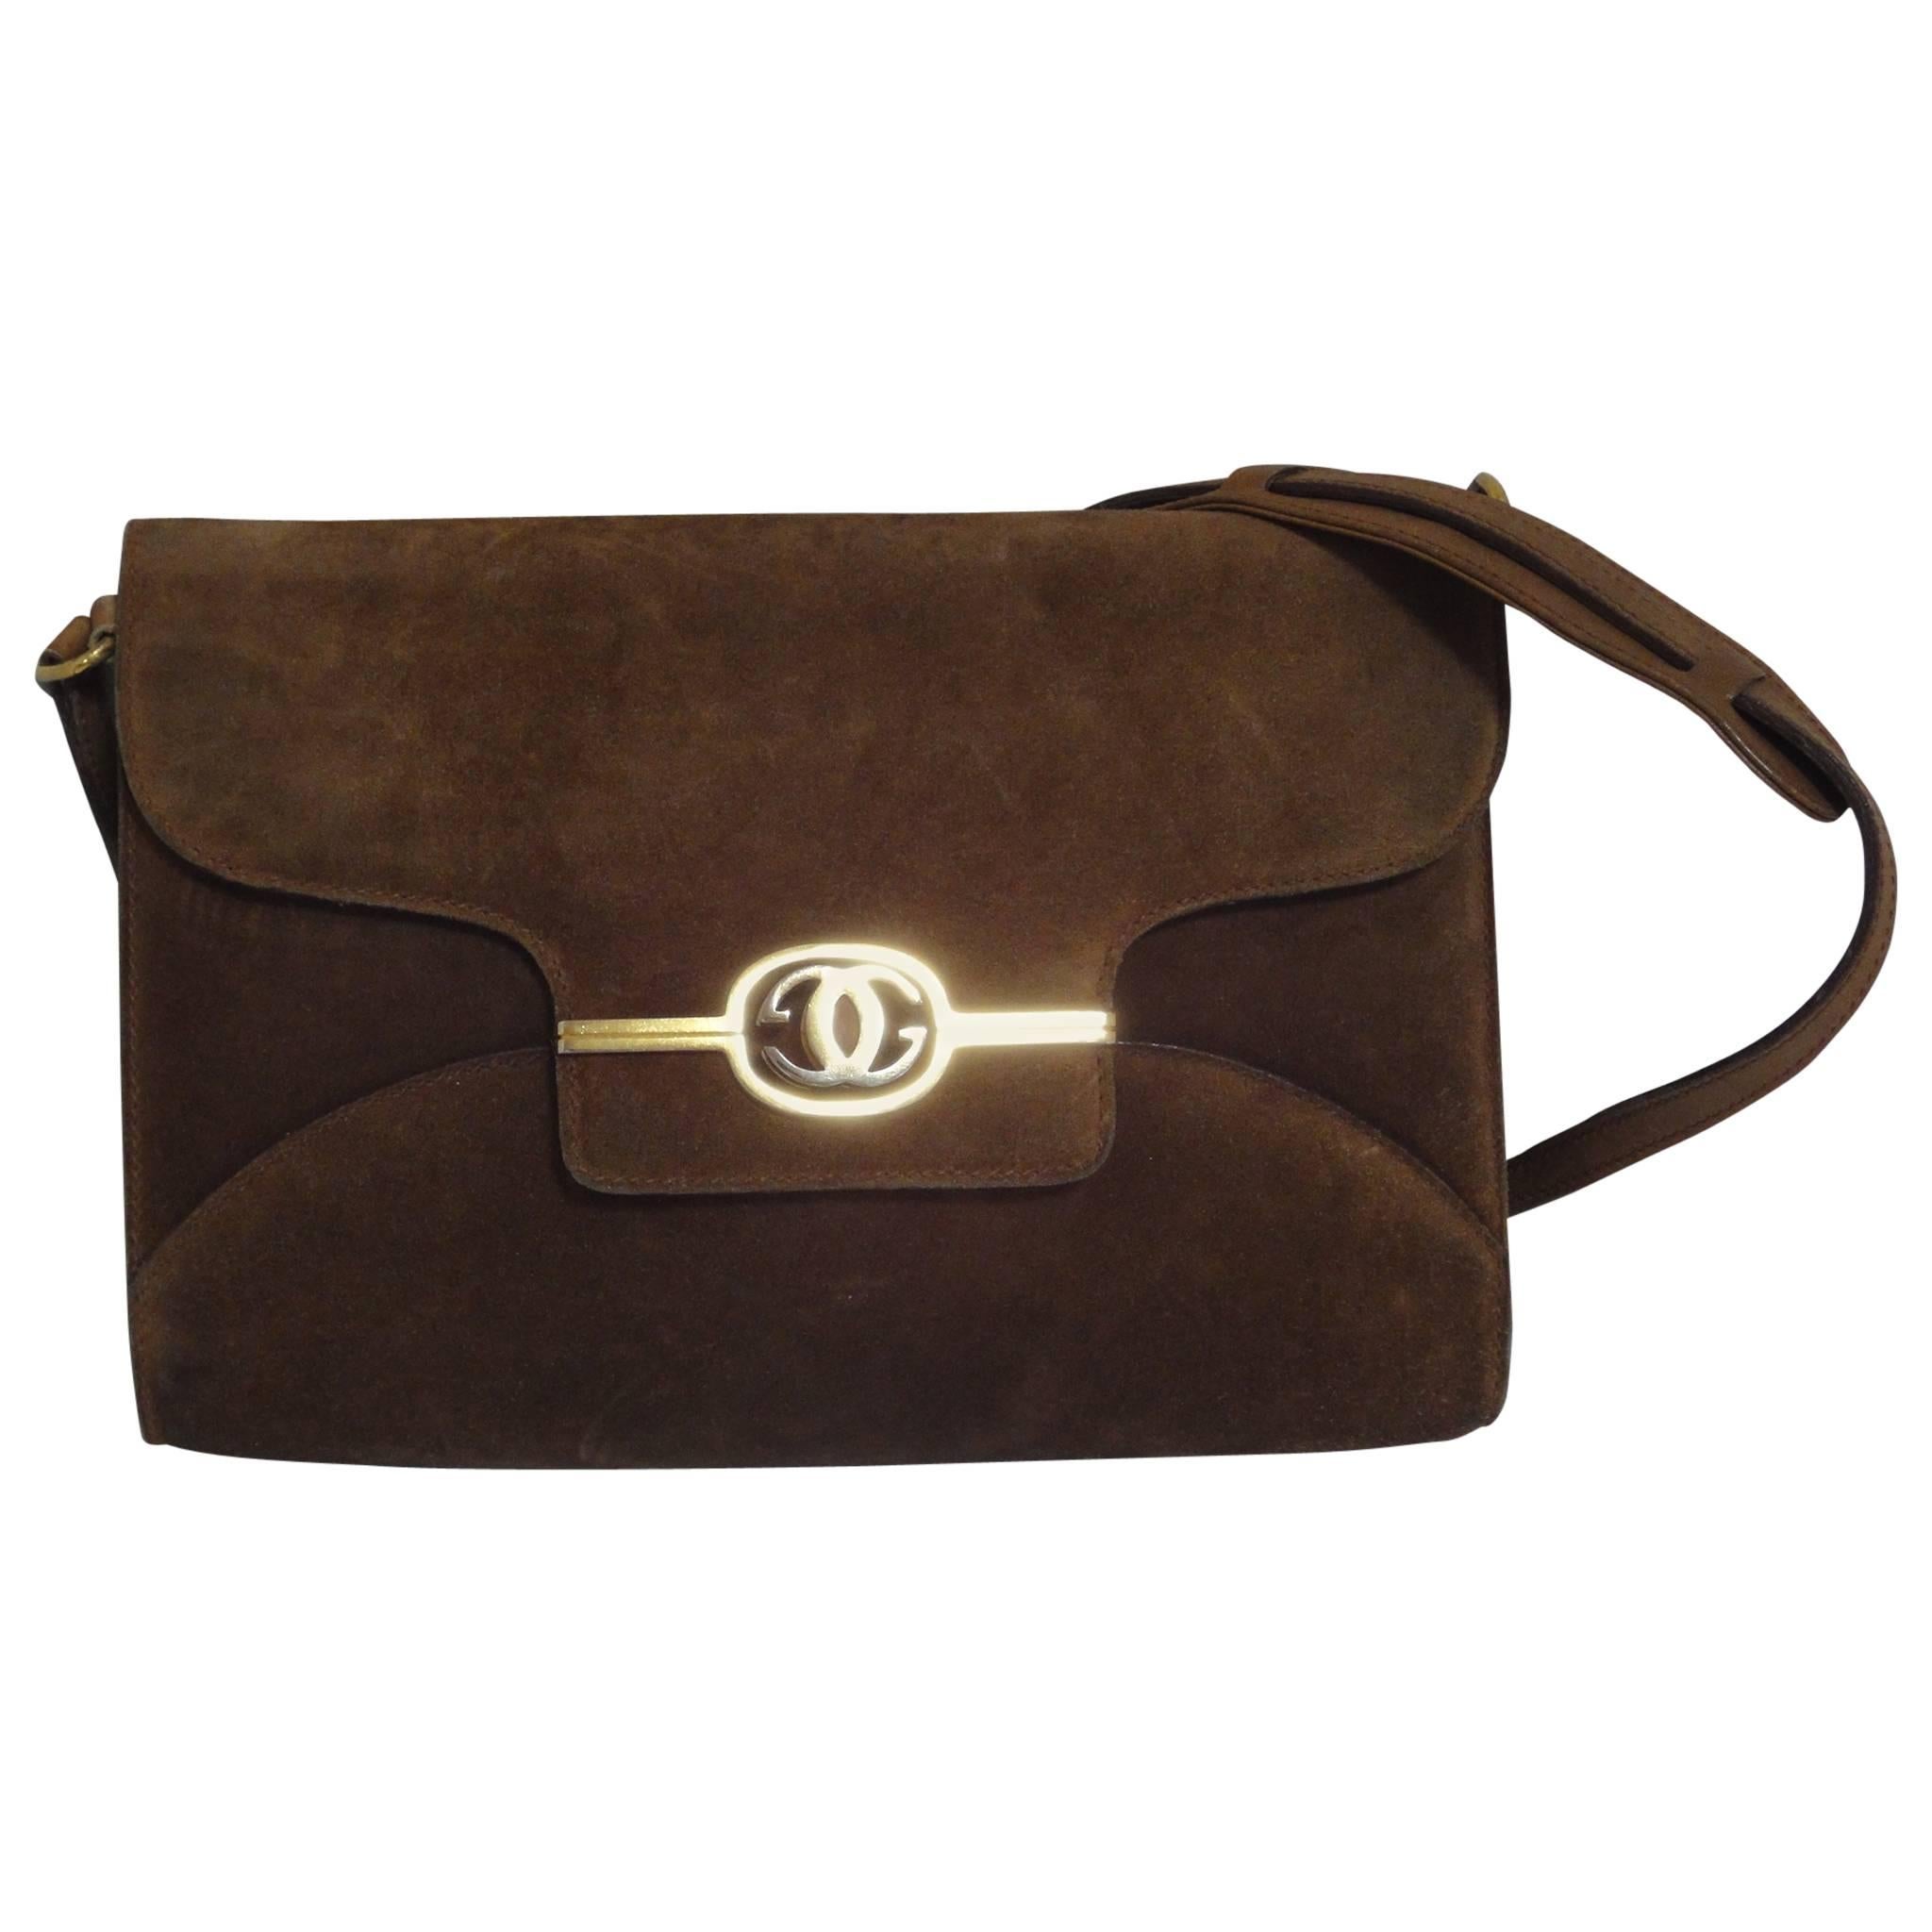 Vintage Gucci tanned brown suede leather shoulder clutch bag with golden logo. 